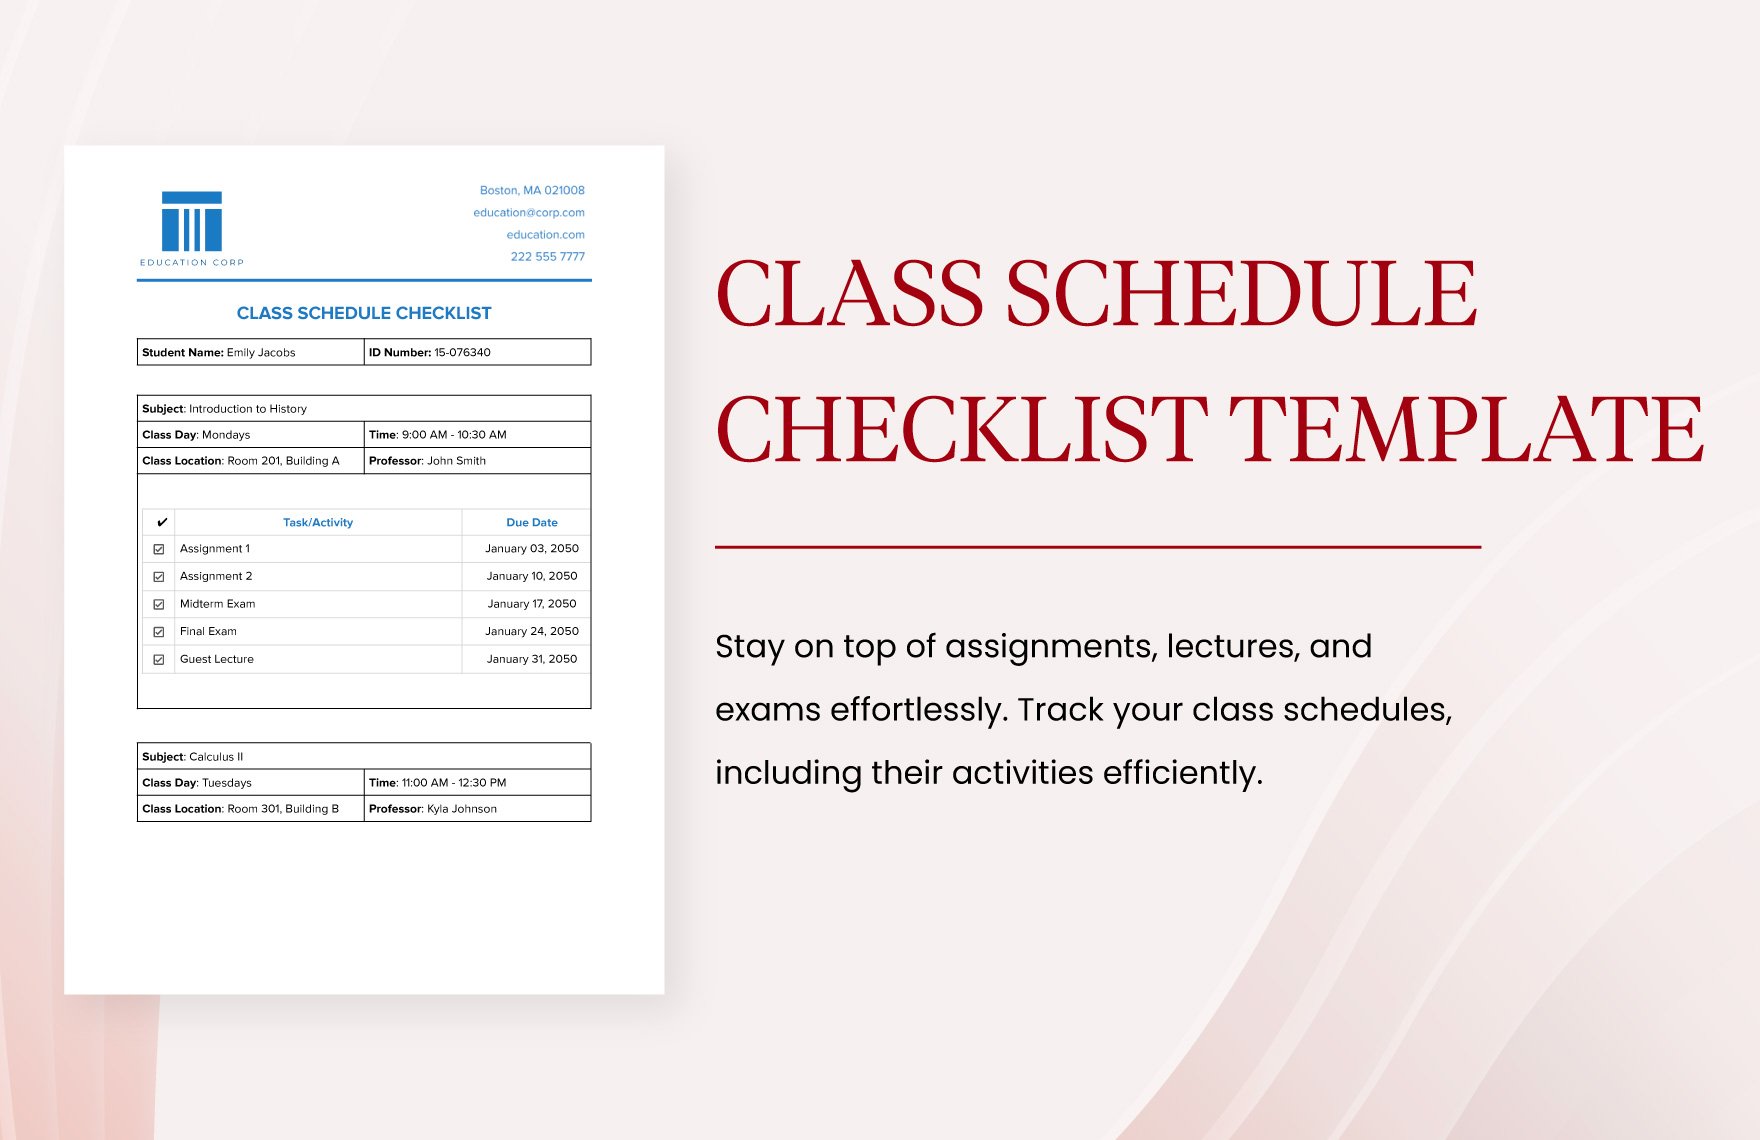 Class Schedule Checklist Template